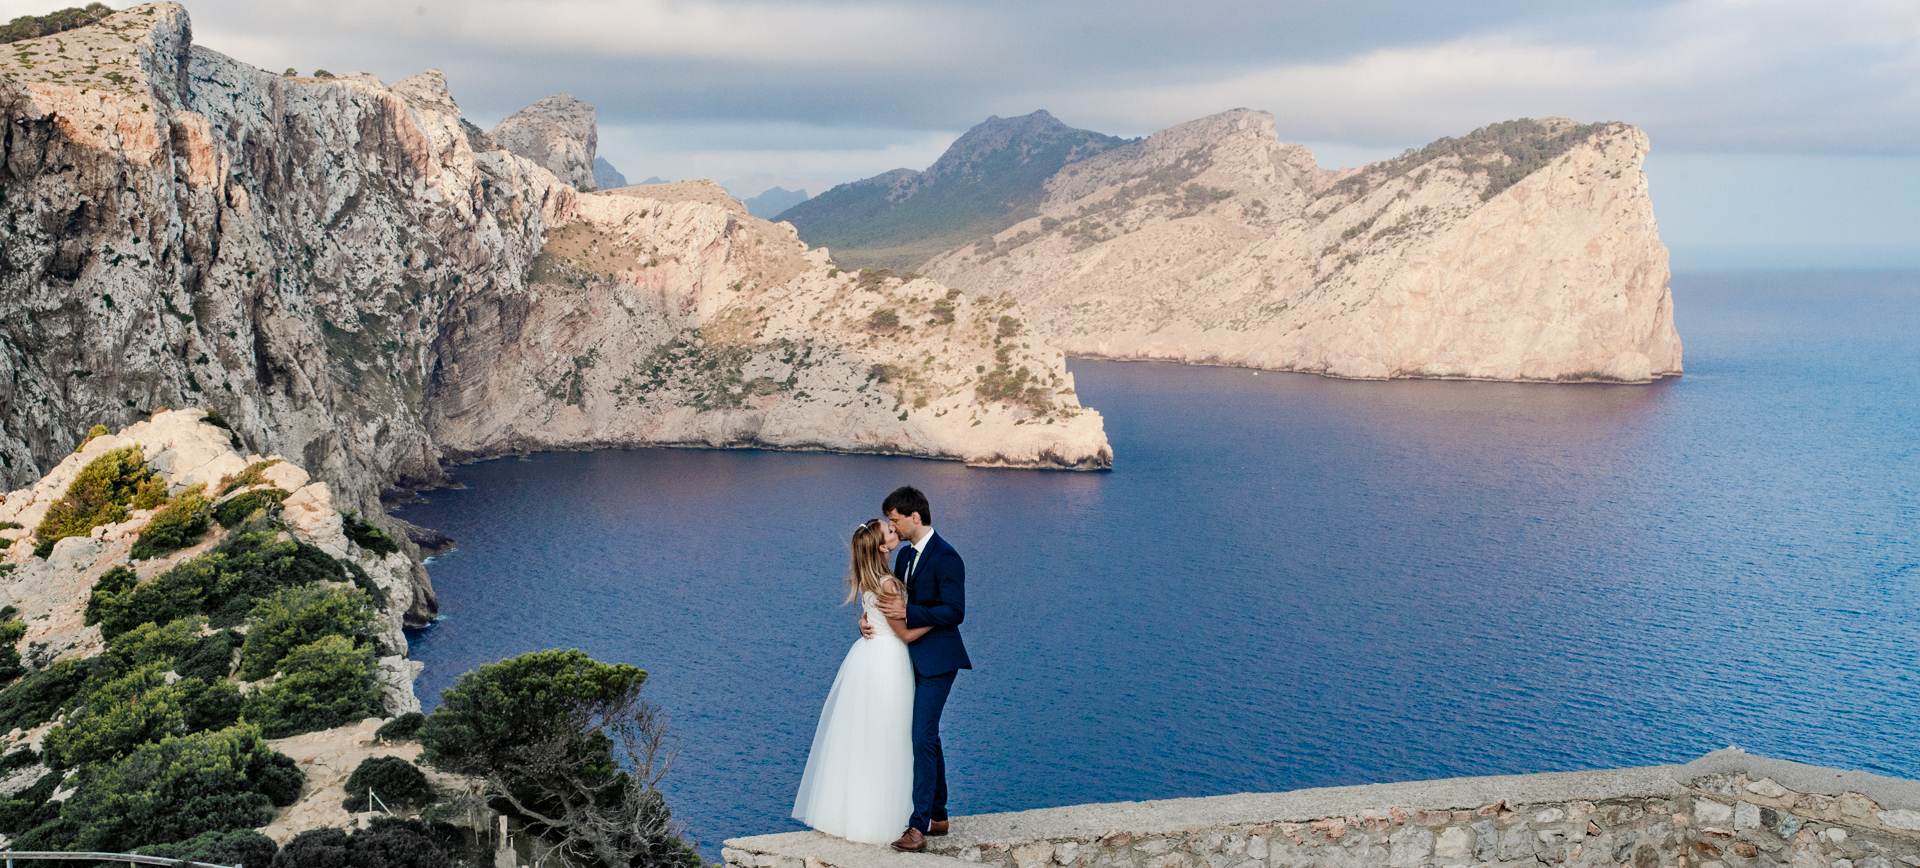 mallorca elopement in Formentor pollensa - scenic wedding photo in Mallorca